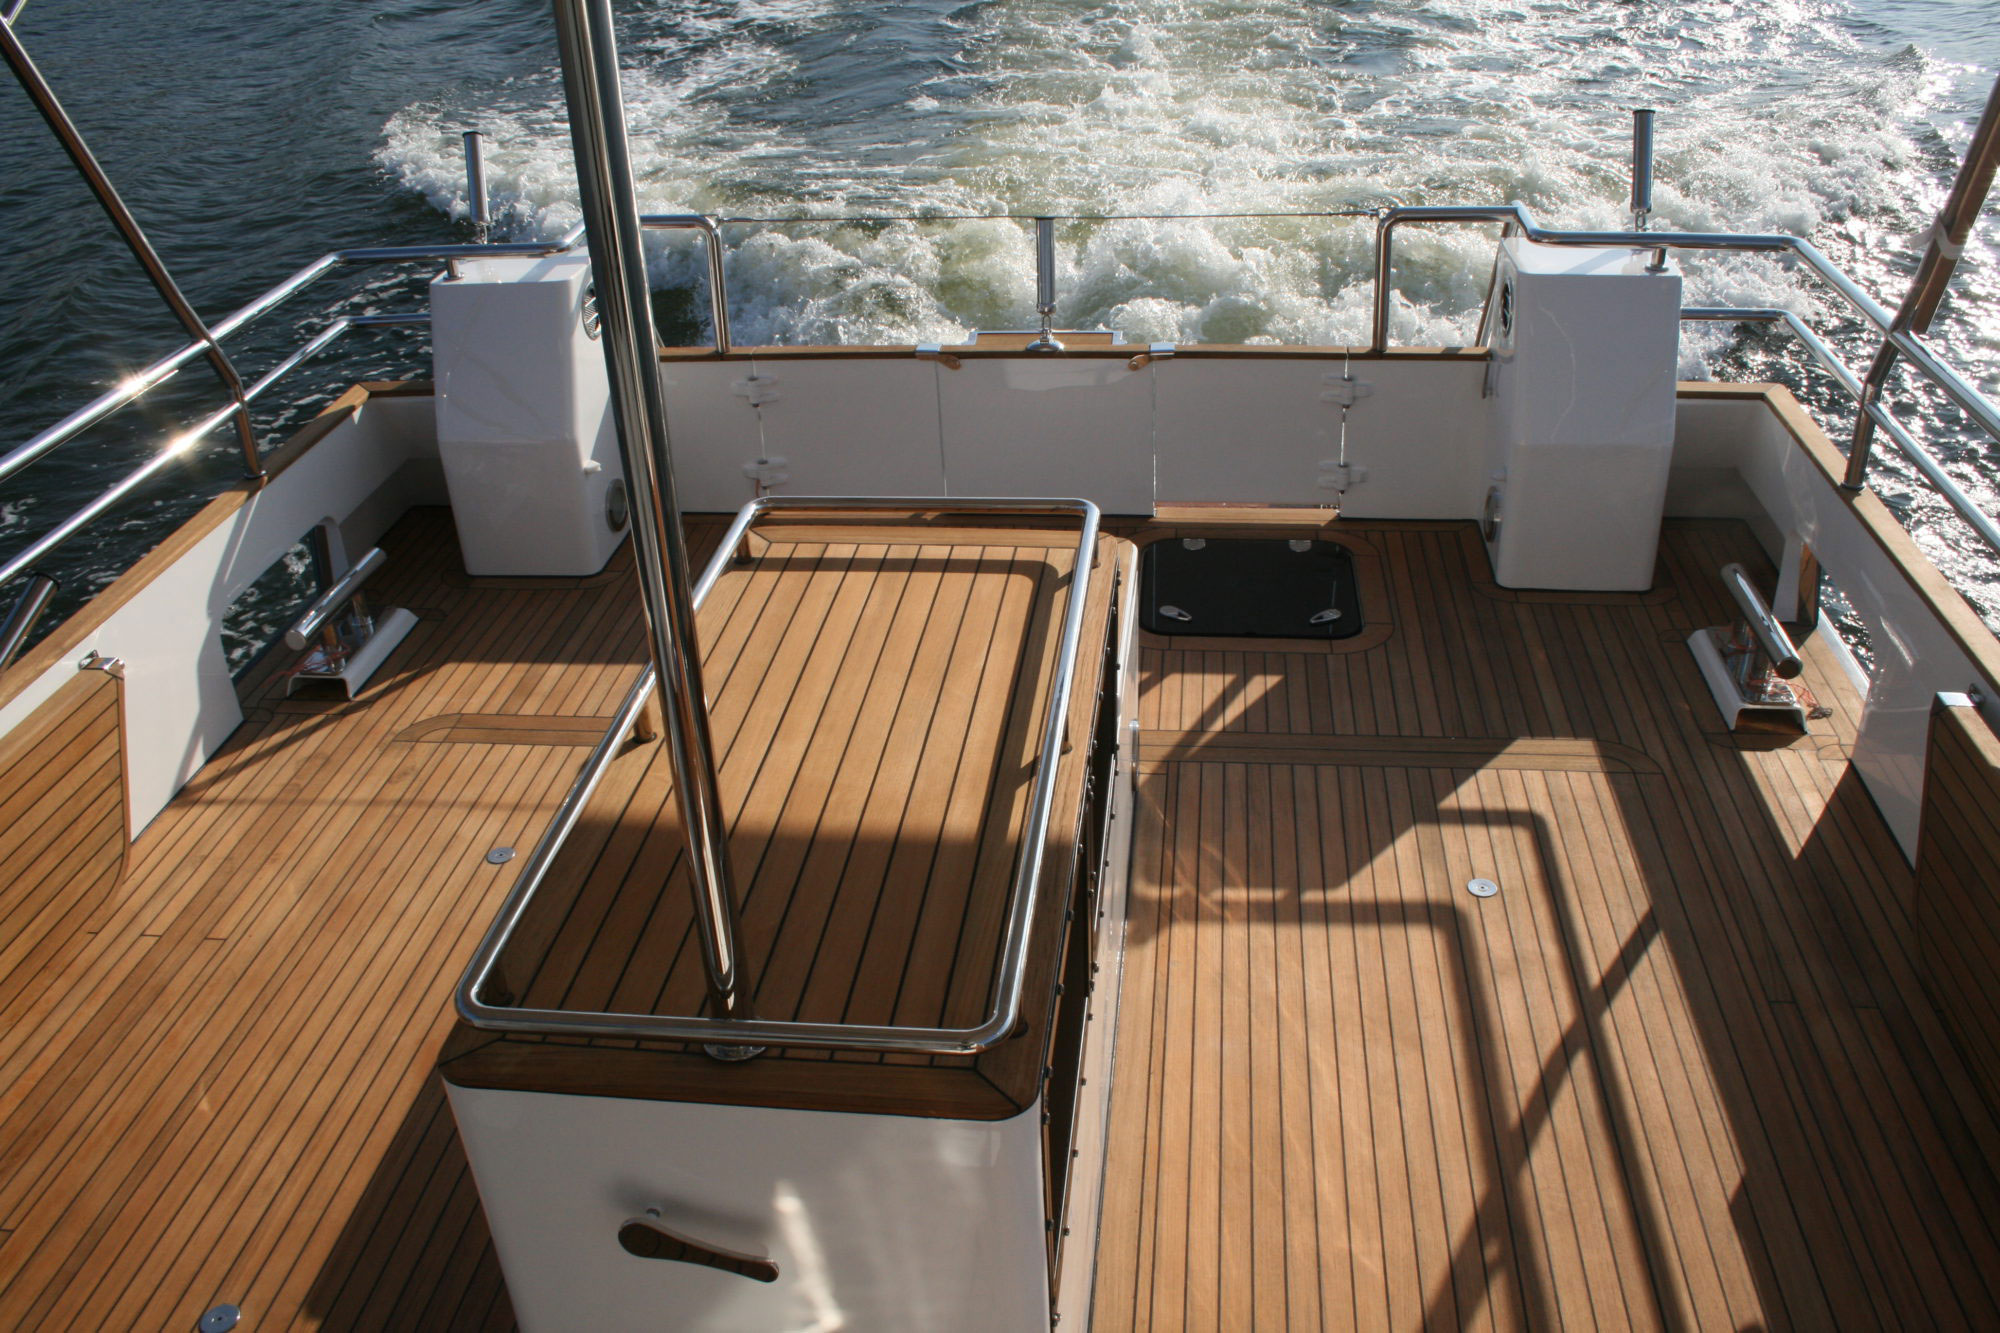 Conrad VIP Soc Docksta performance boat aft platform ideal for fishing day trips.